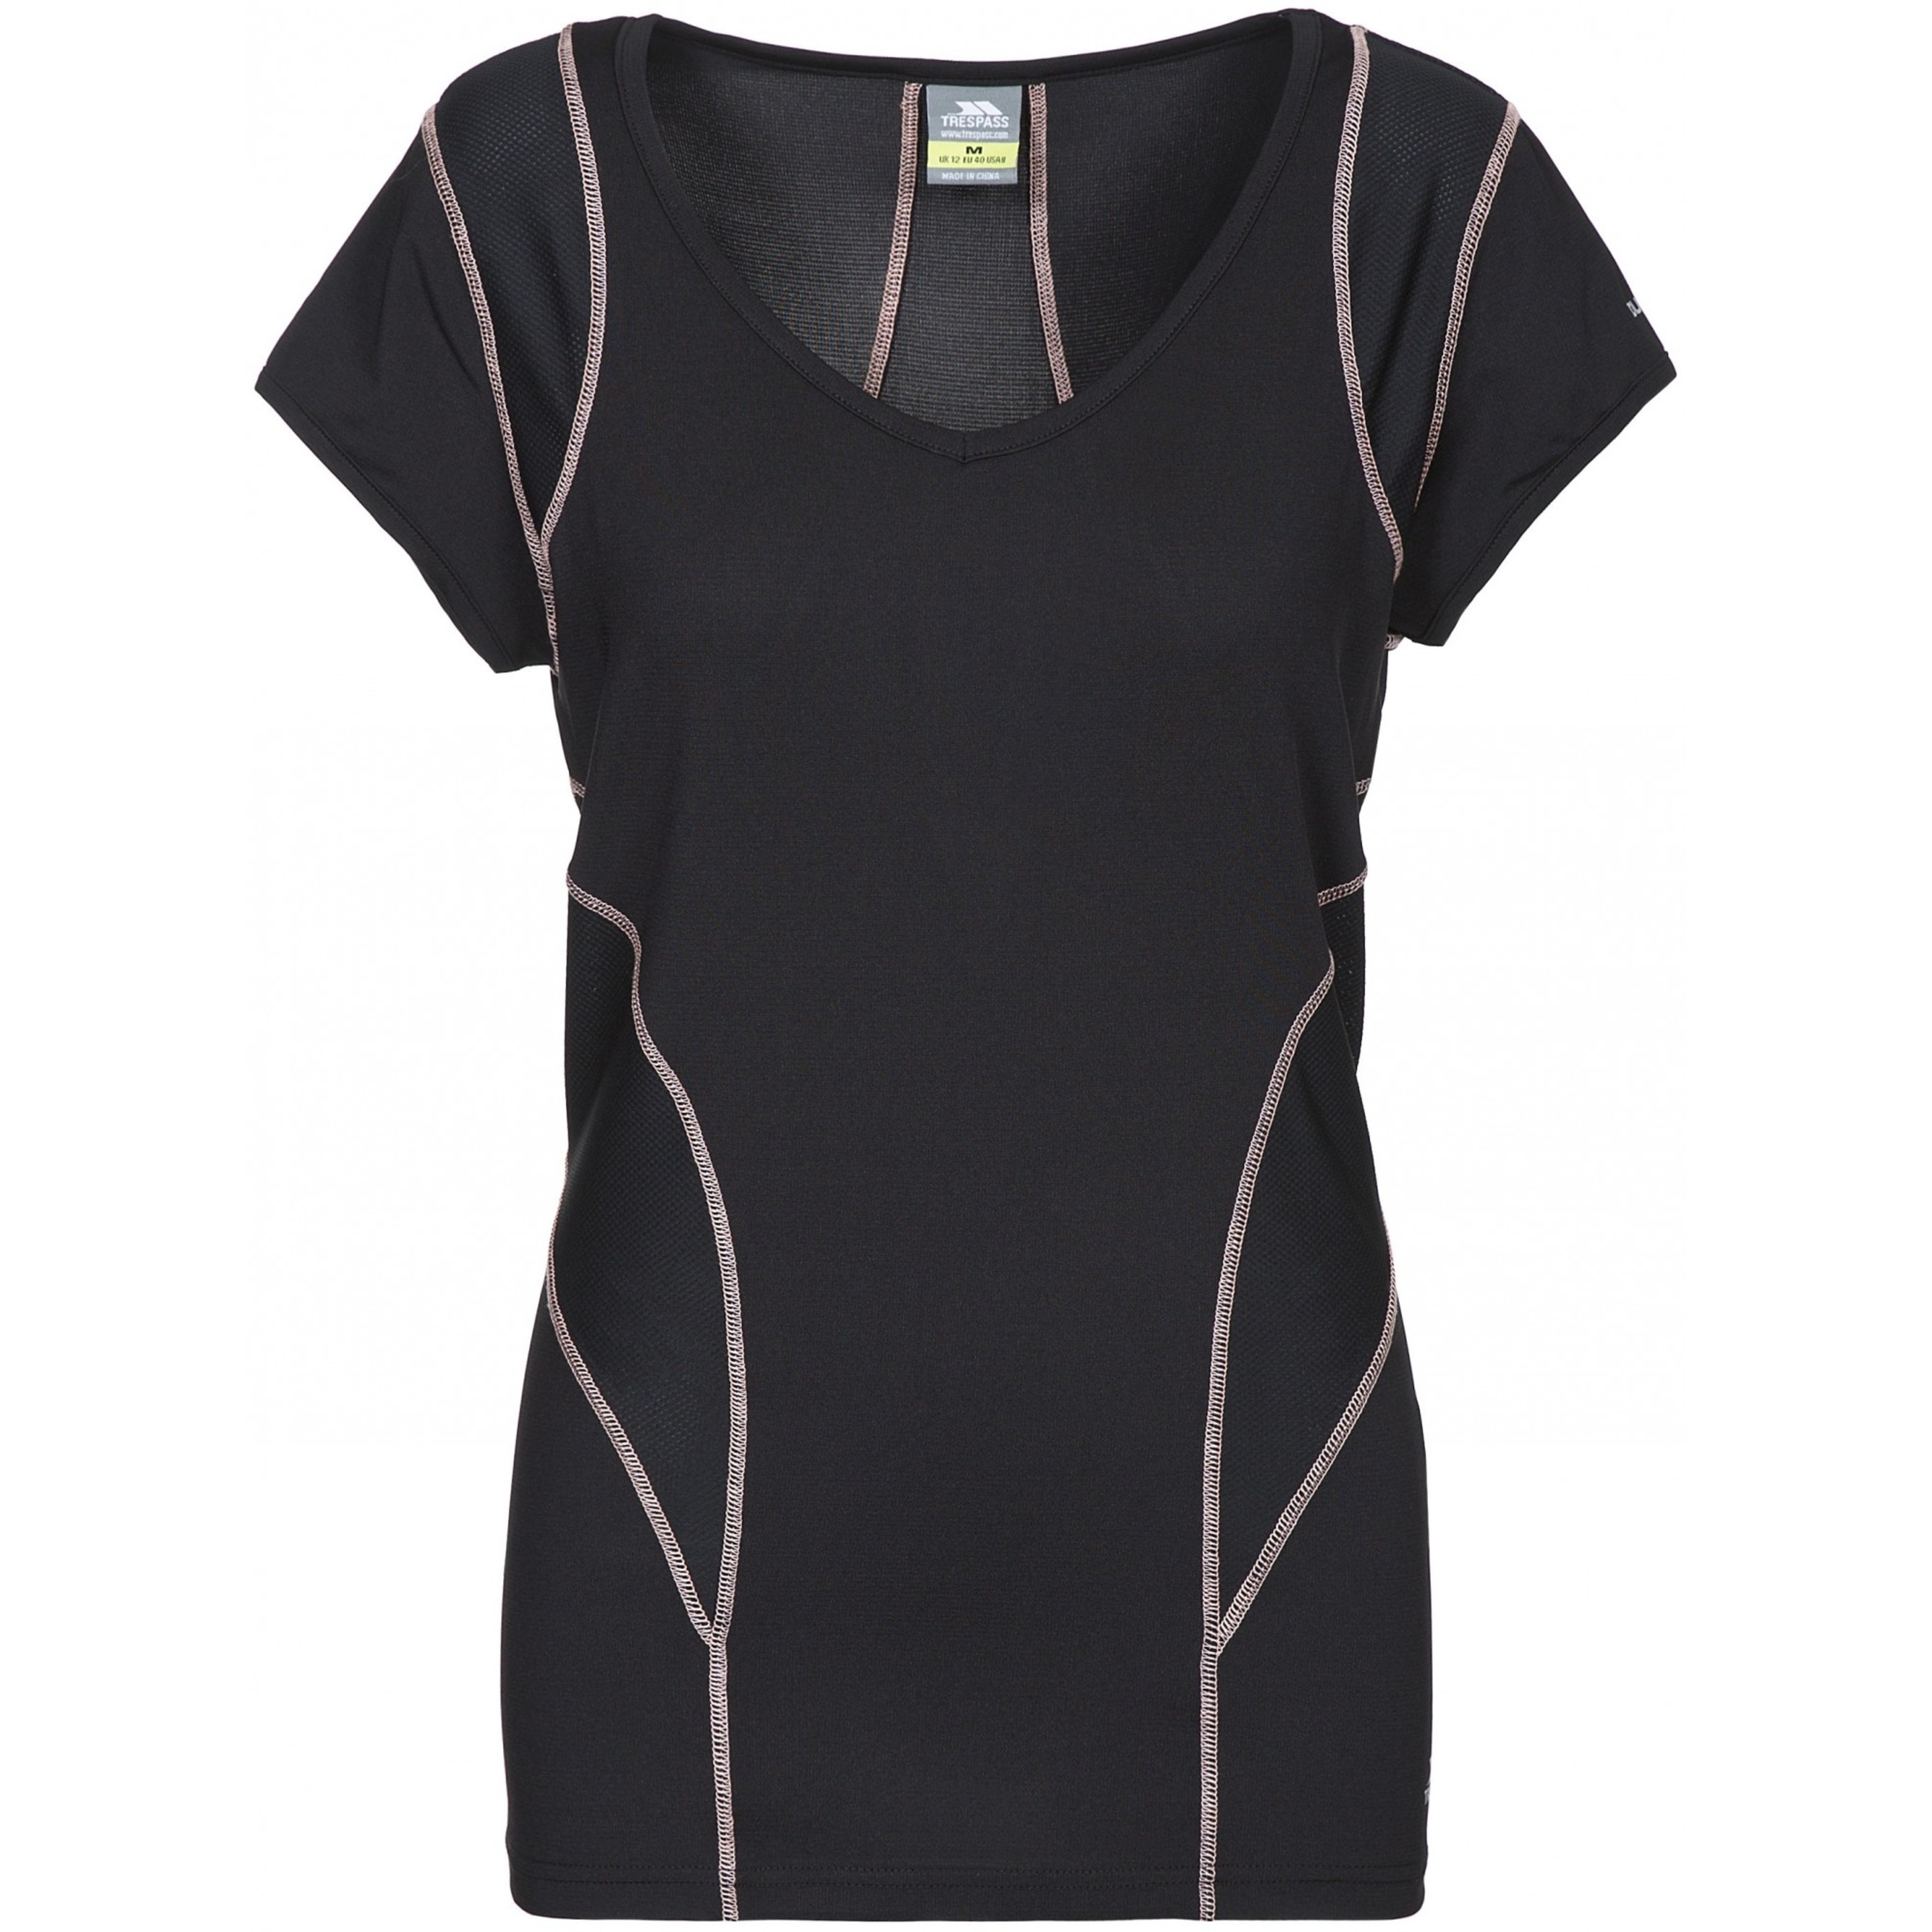 Camiseta Esportiva Feminina/ladies Erlin Short Sleeve Trespass (Preto)